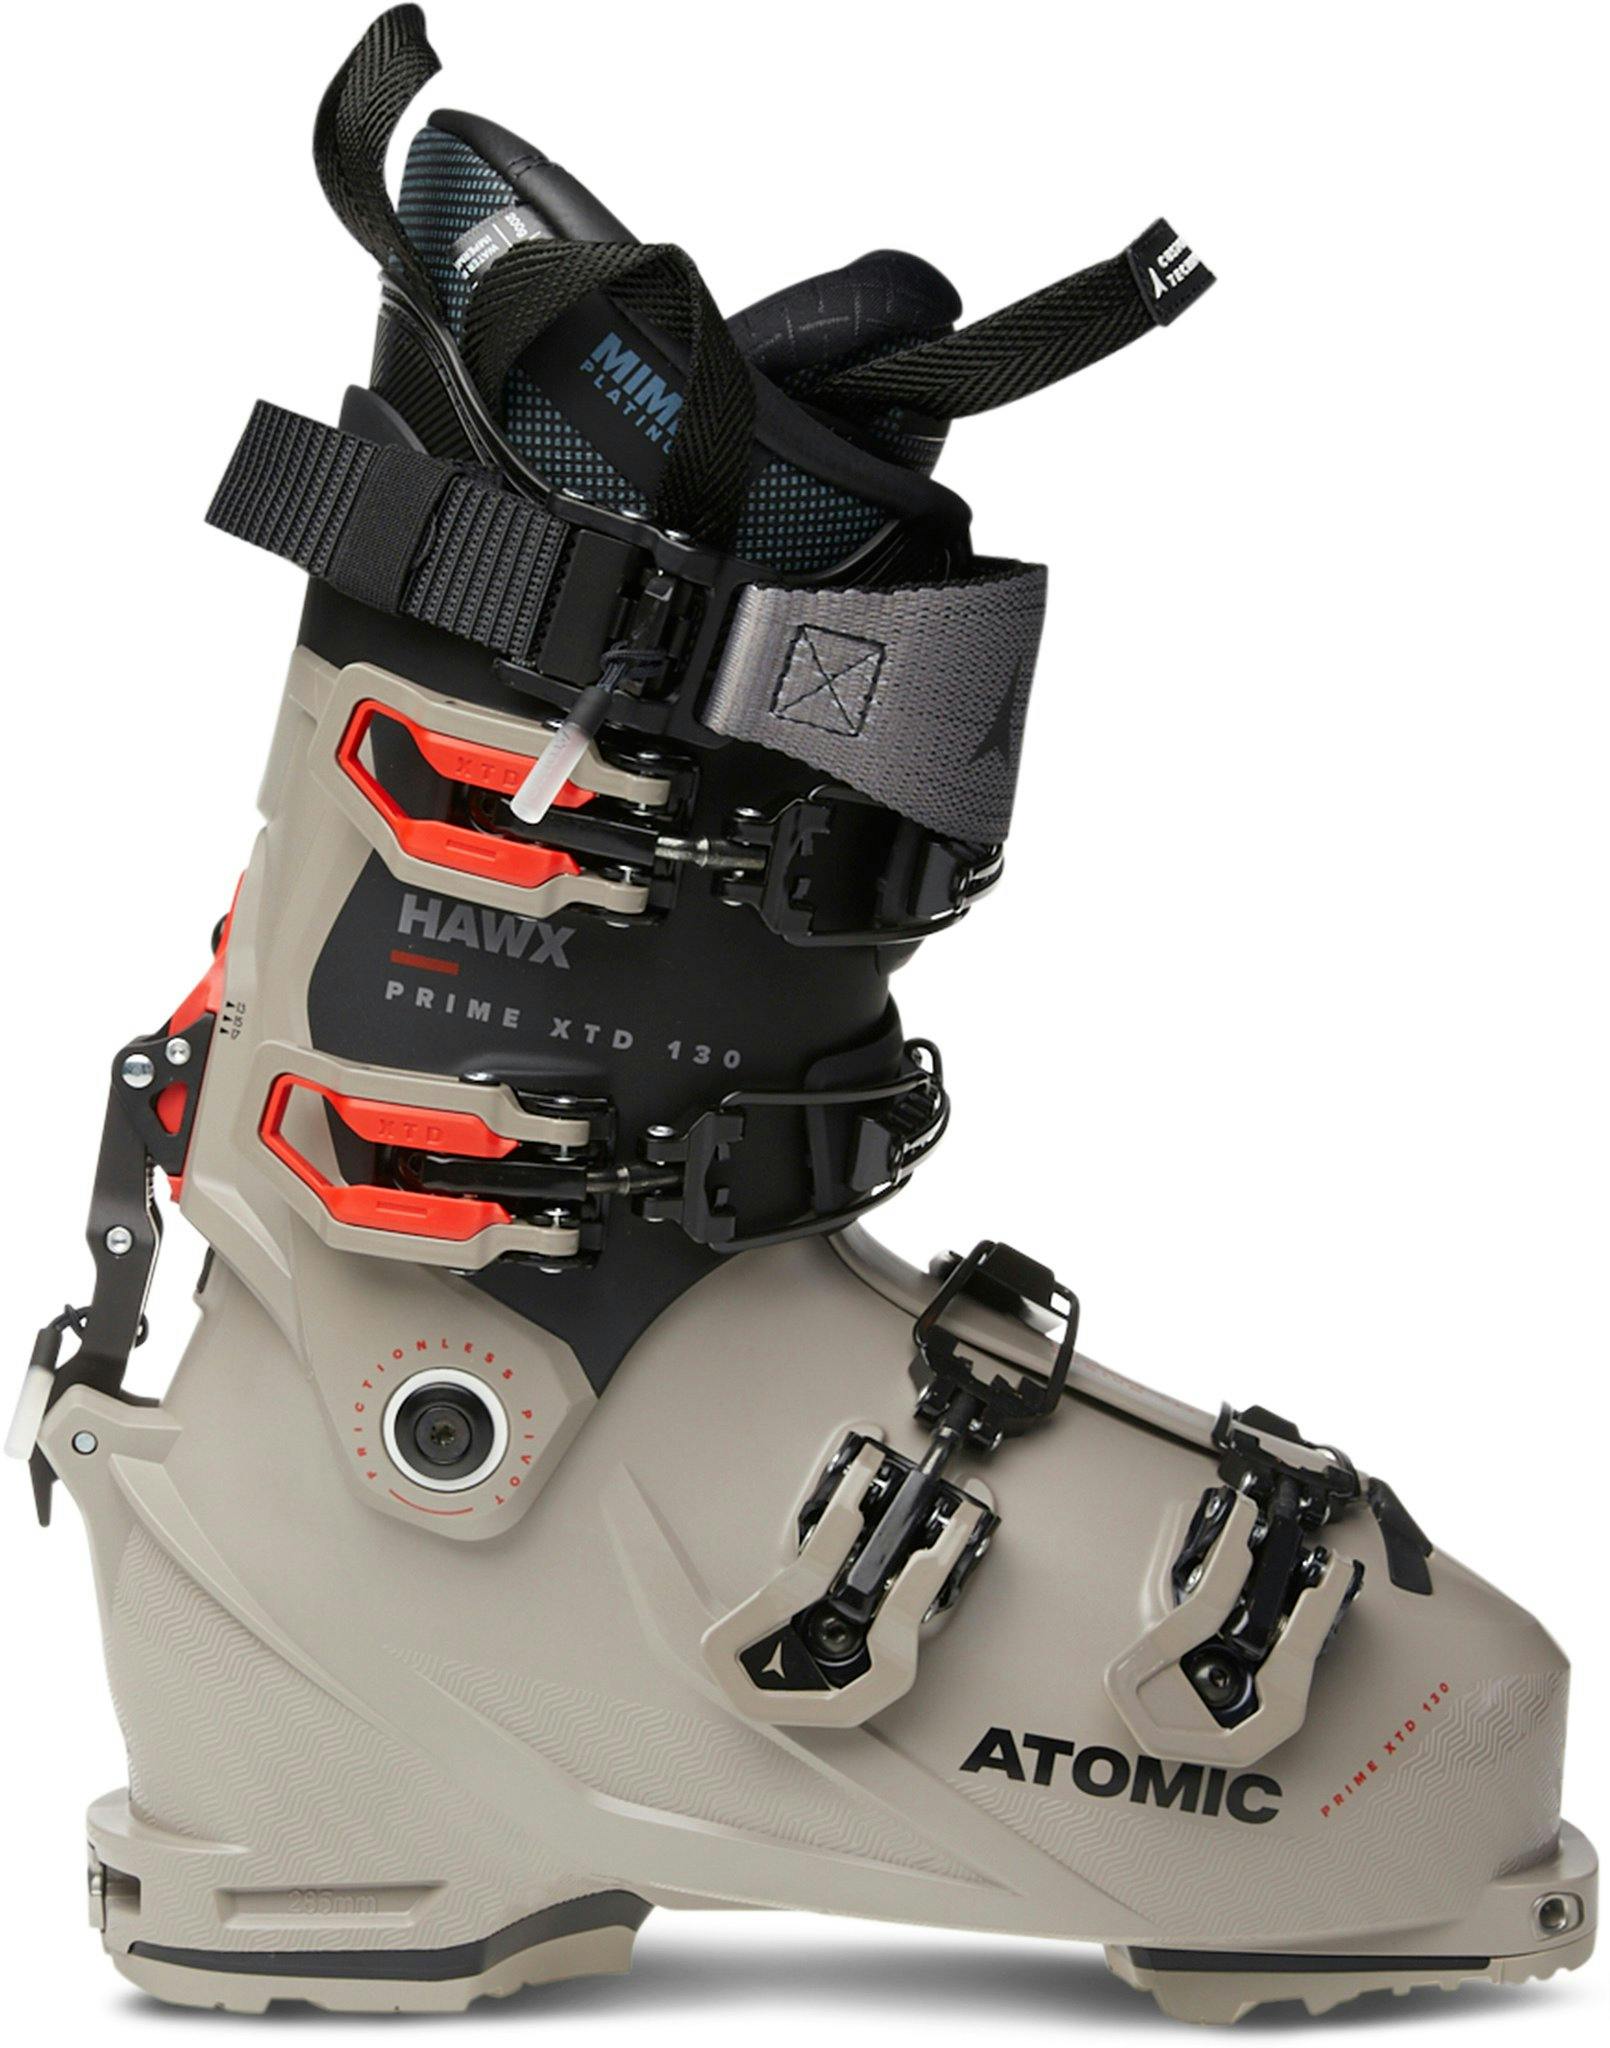 Product image for Hawx Prime XTD 130 GW Ski Boots - Unisex